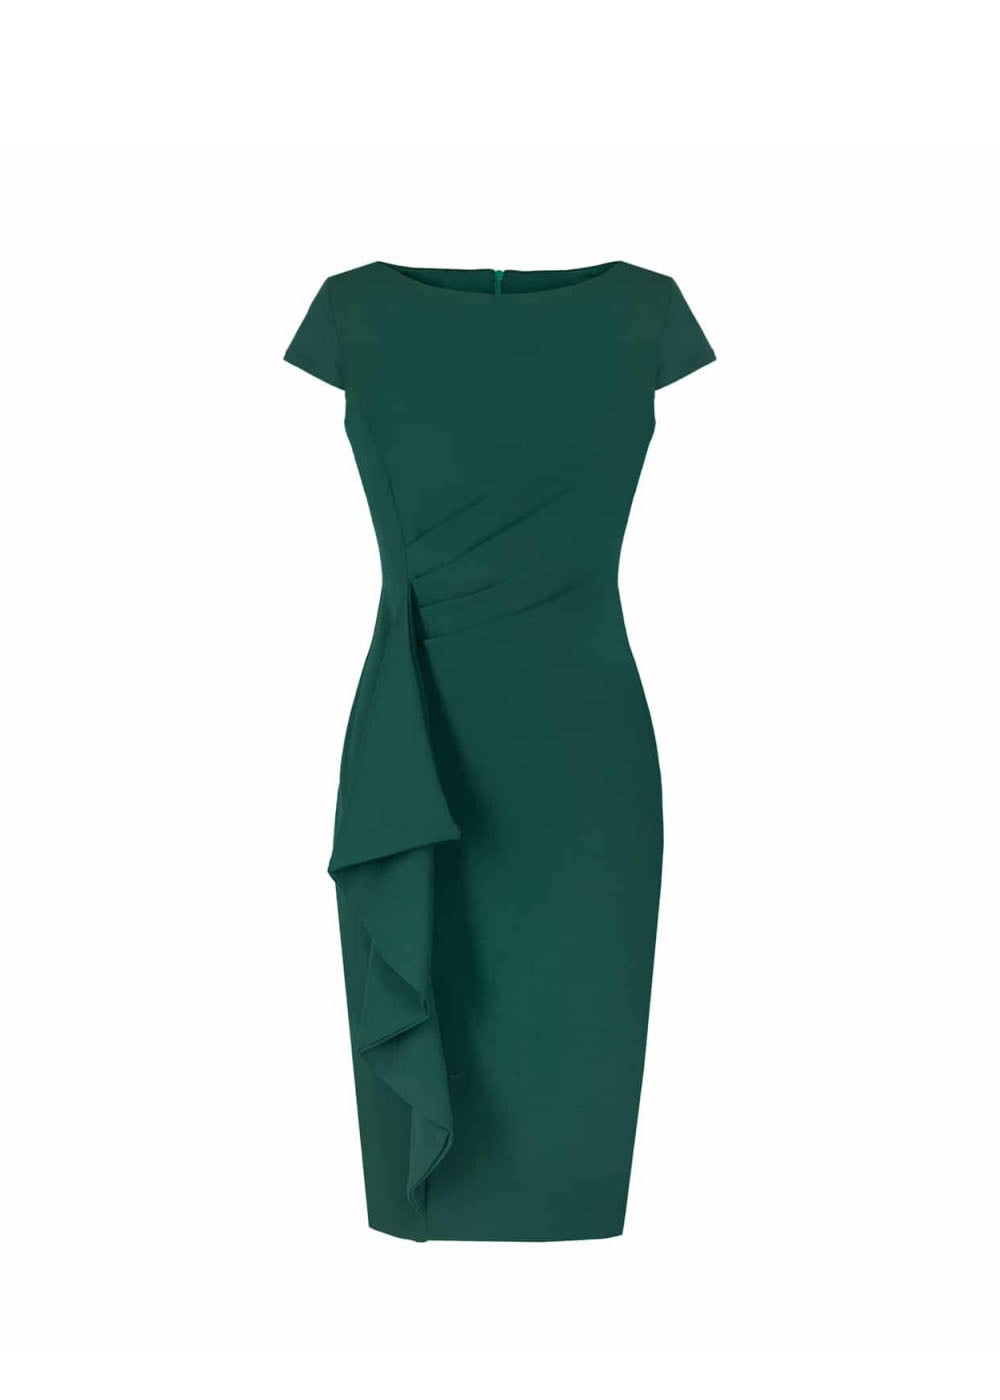 Sukienka klasyczna zielona BLANCA II